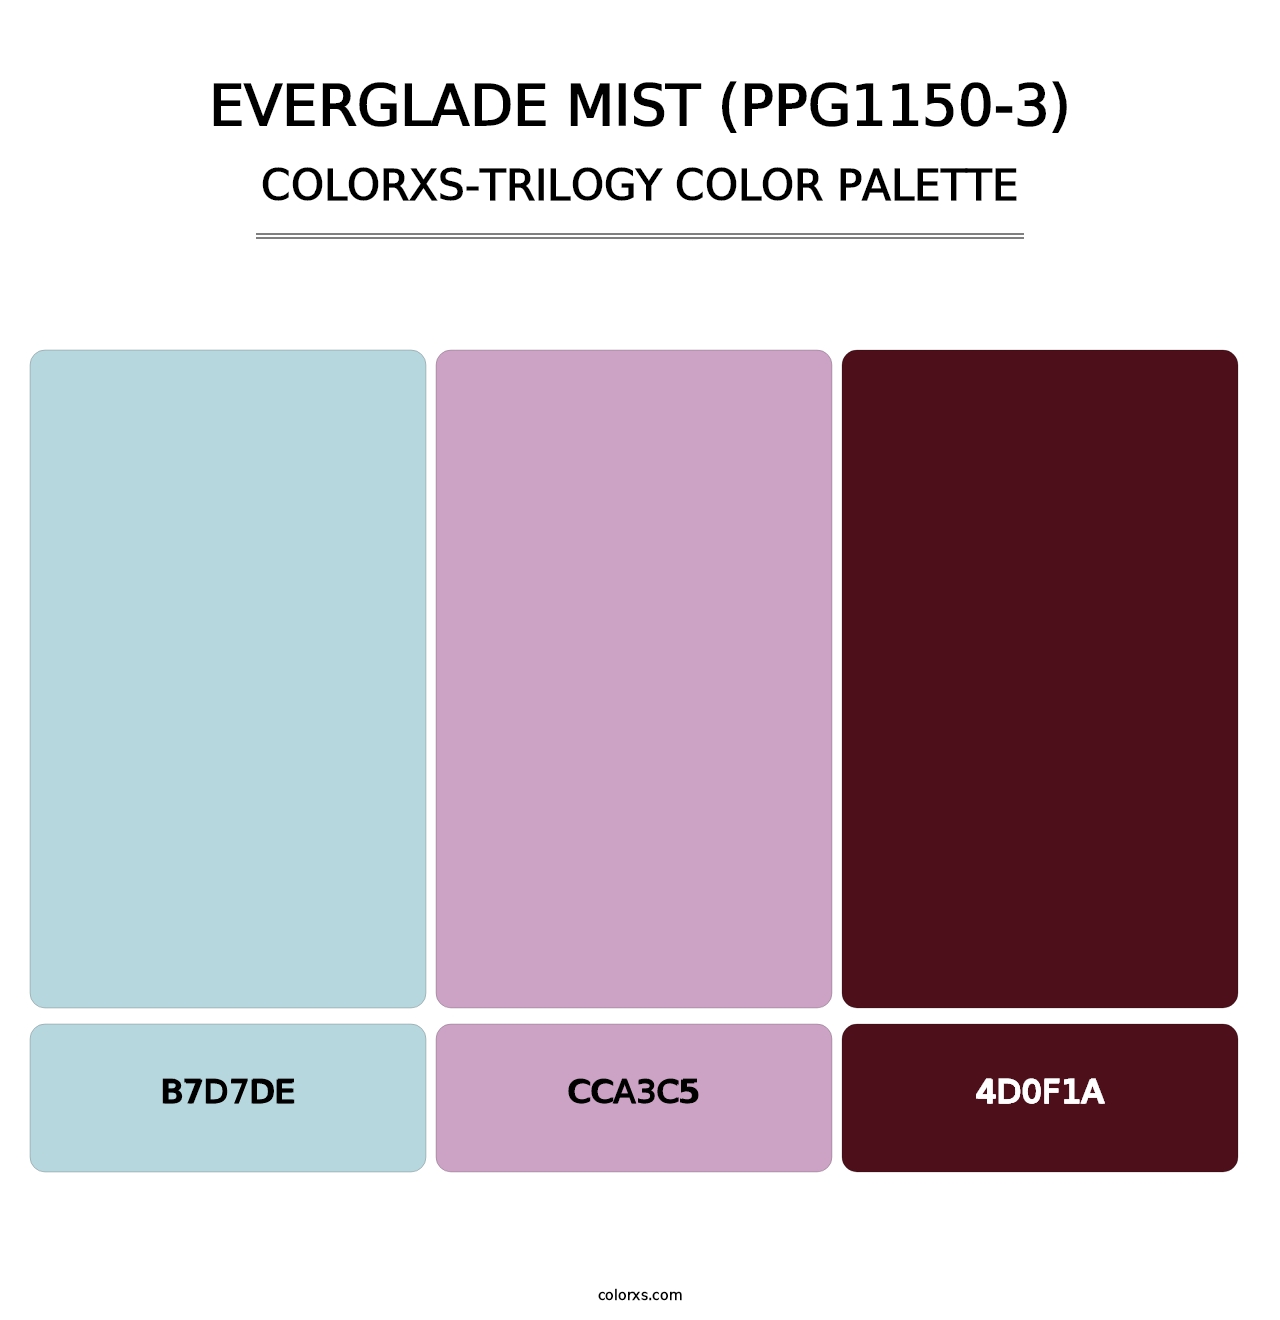 Everglade Mist (PPG1150-3) - Colorxs Trilogy Palette